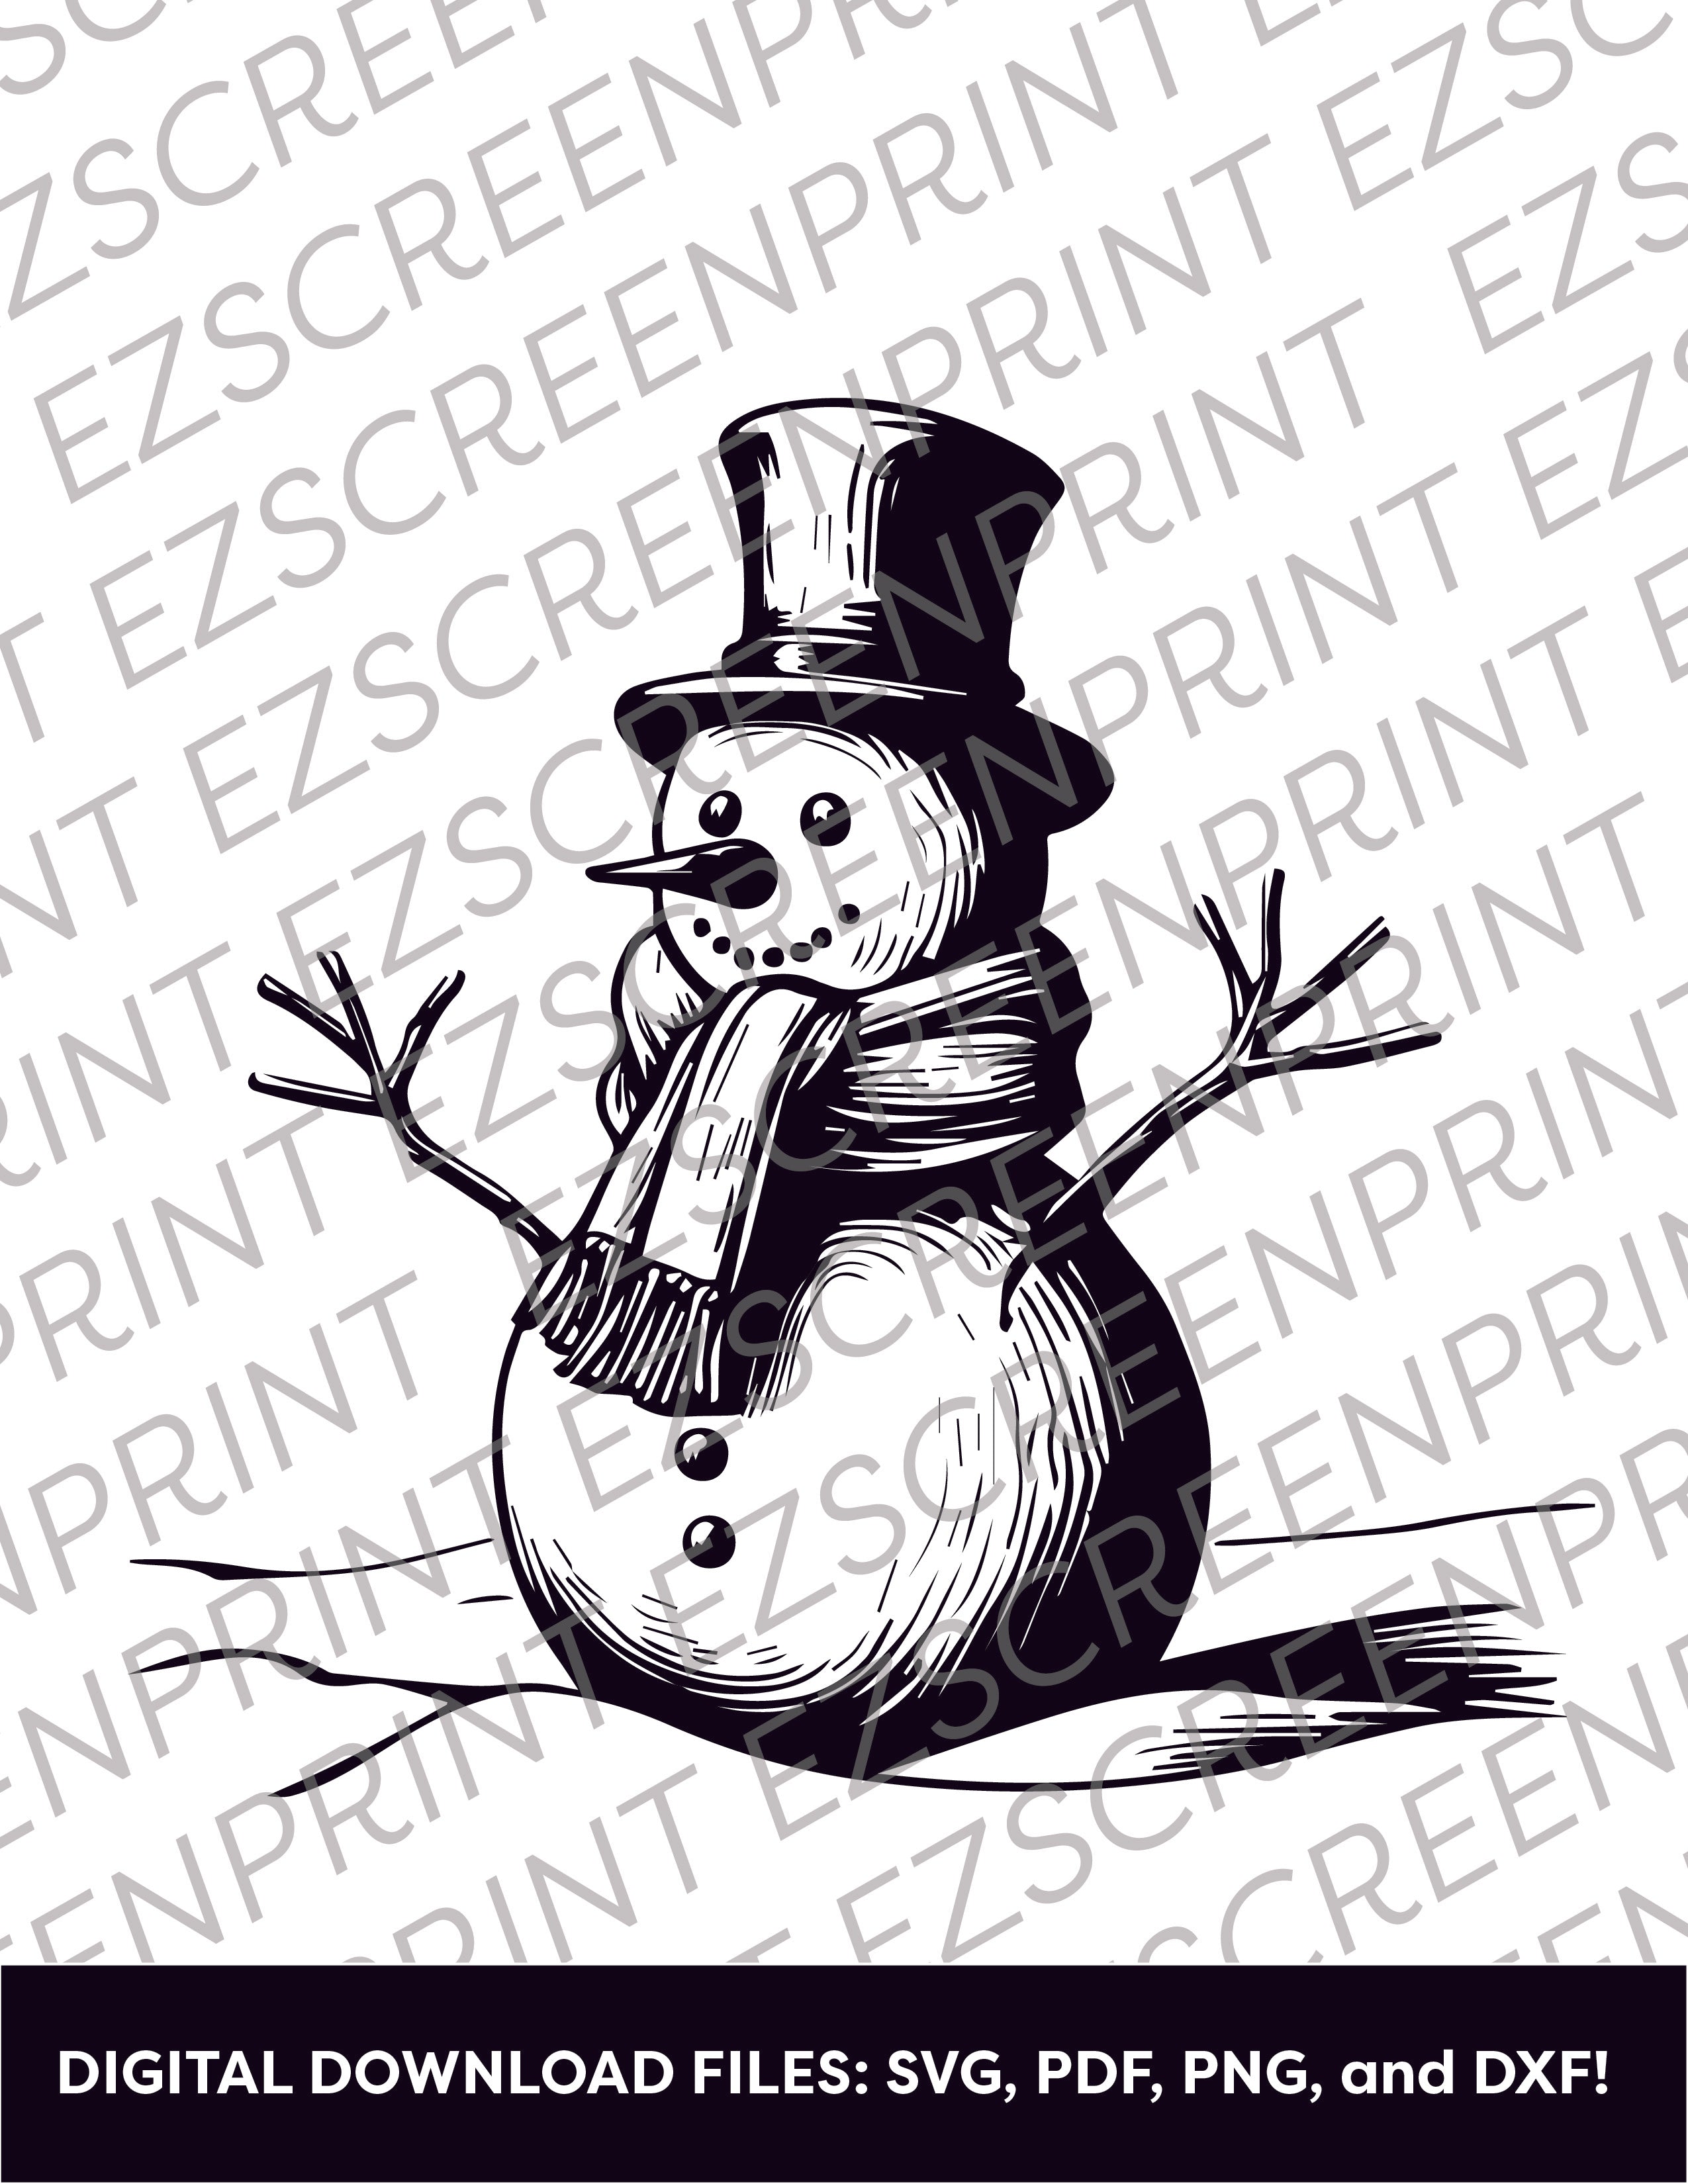 Vintage Snowman 2, Various Sizes + Digital Download